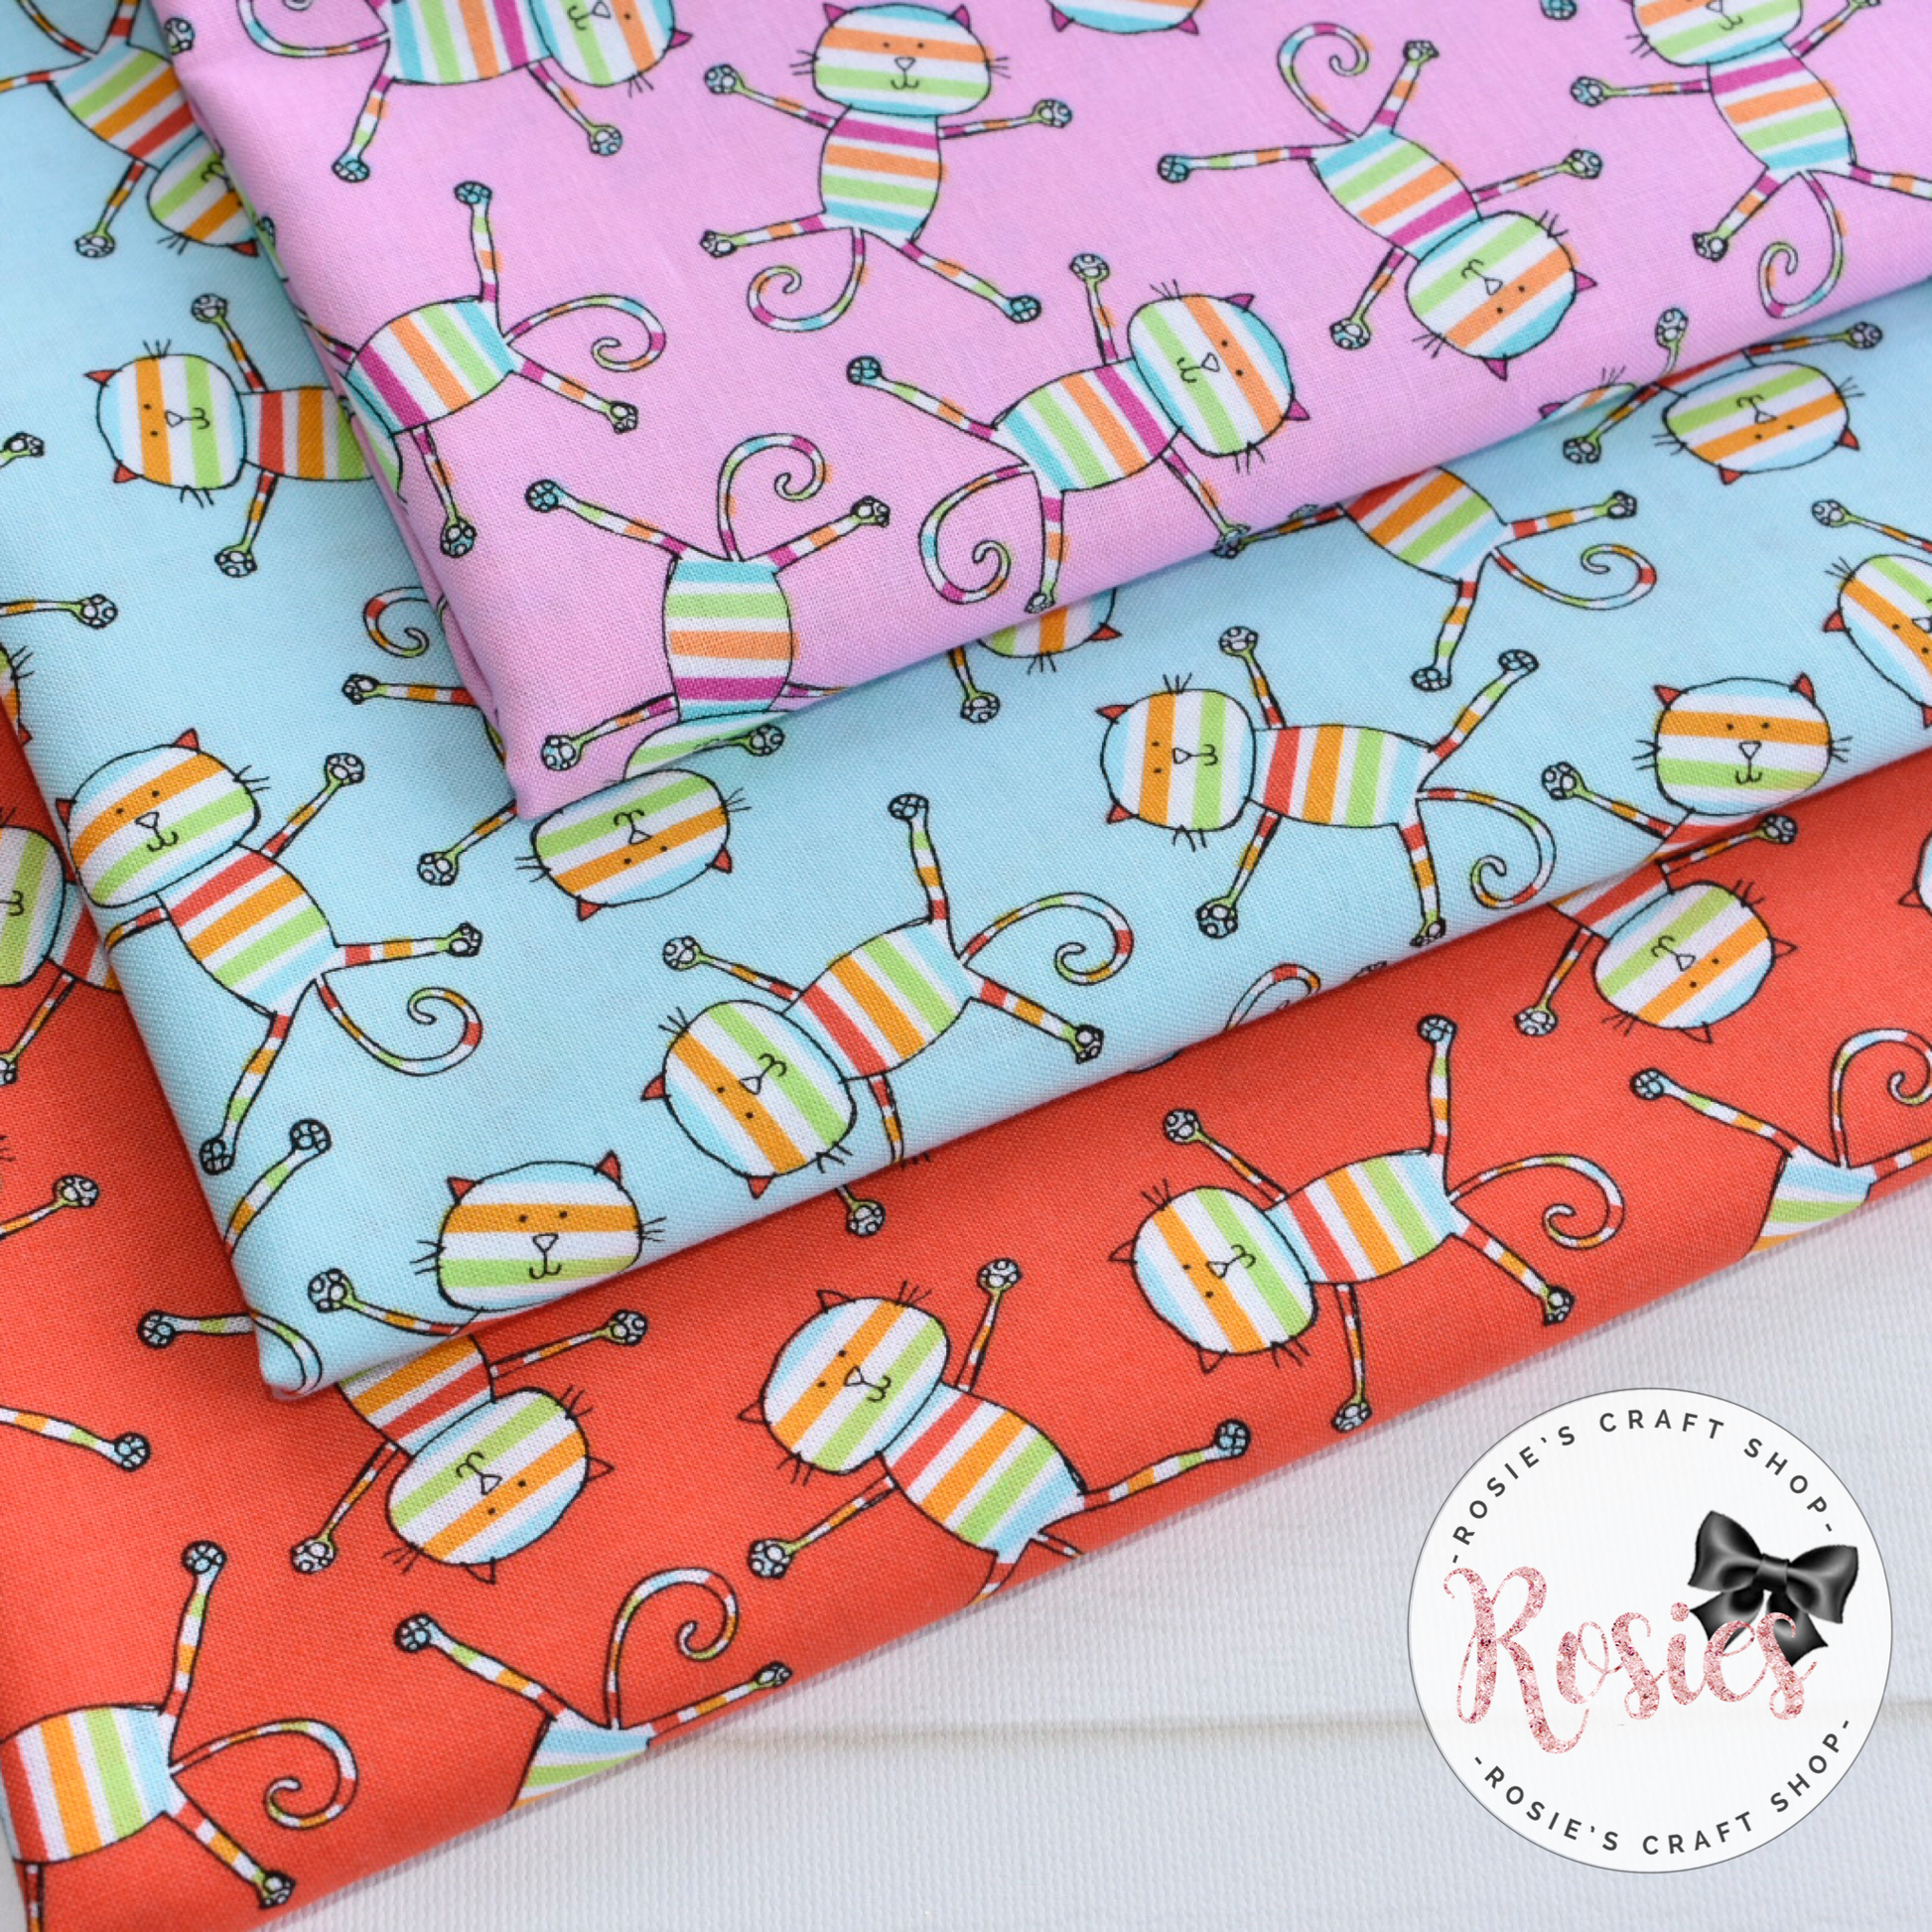 Rainbow Cats Designer Fabric Felt - Rosie's Craft Shop Ltd